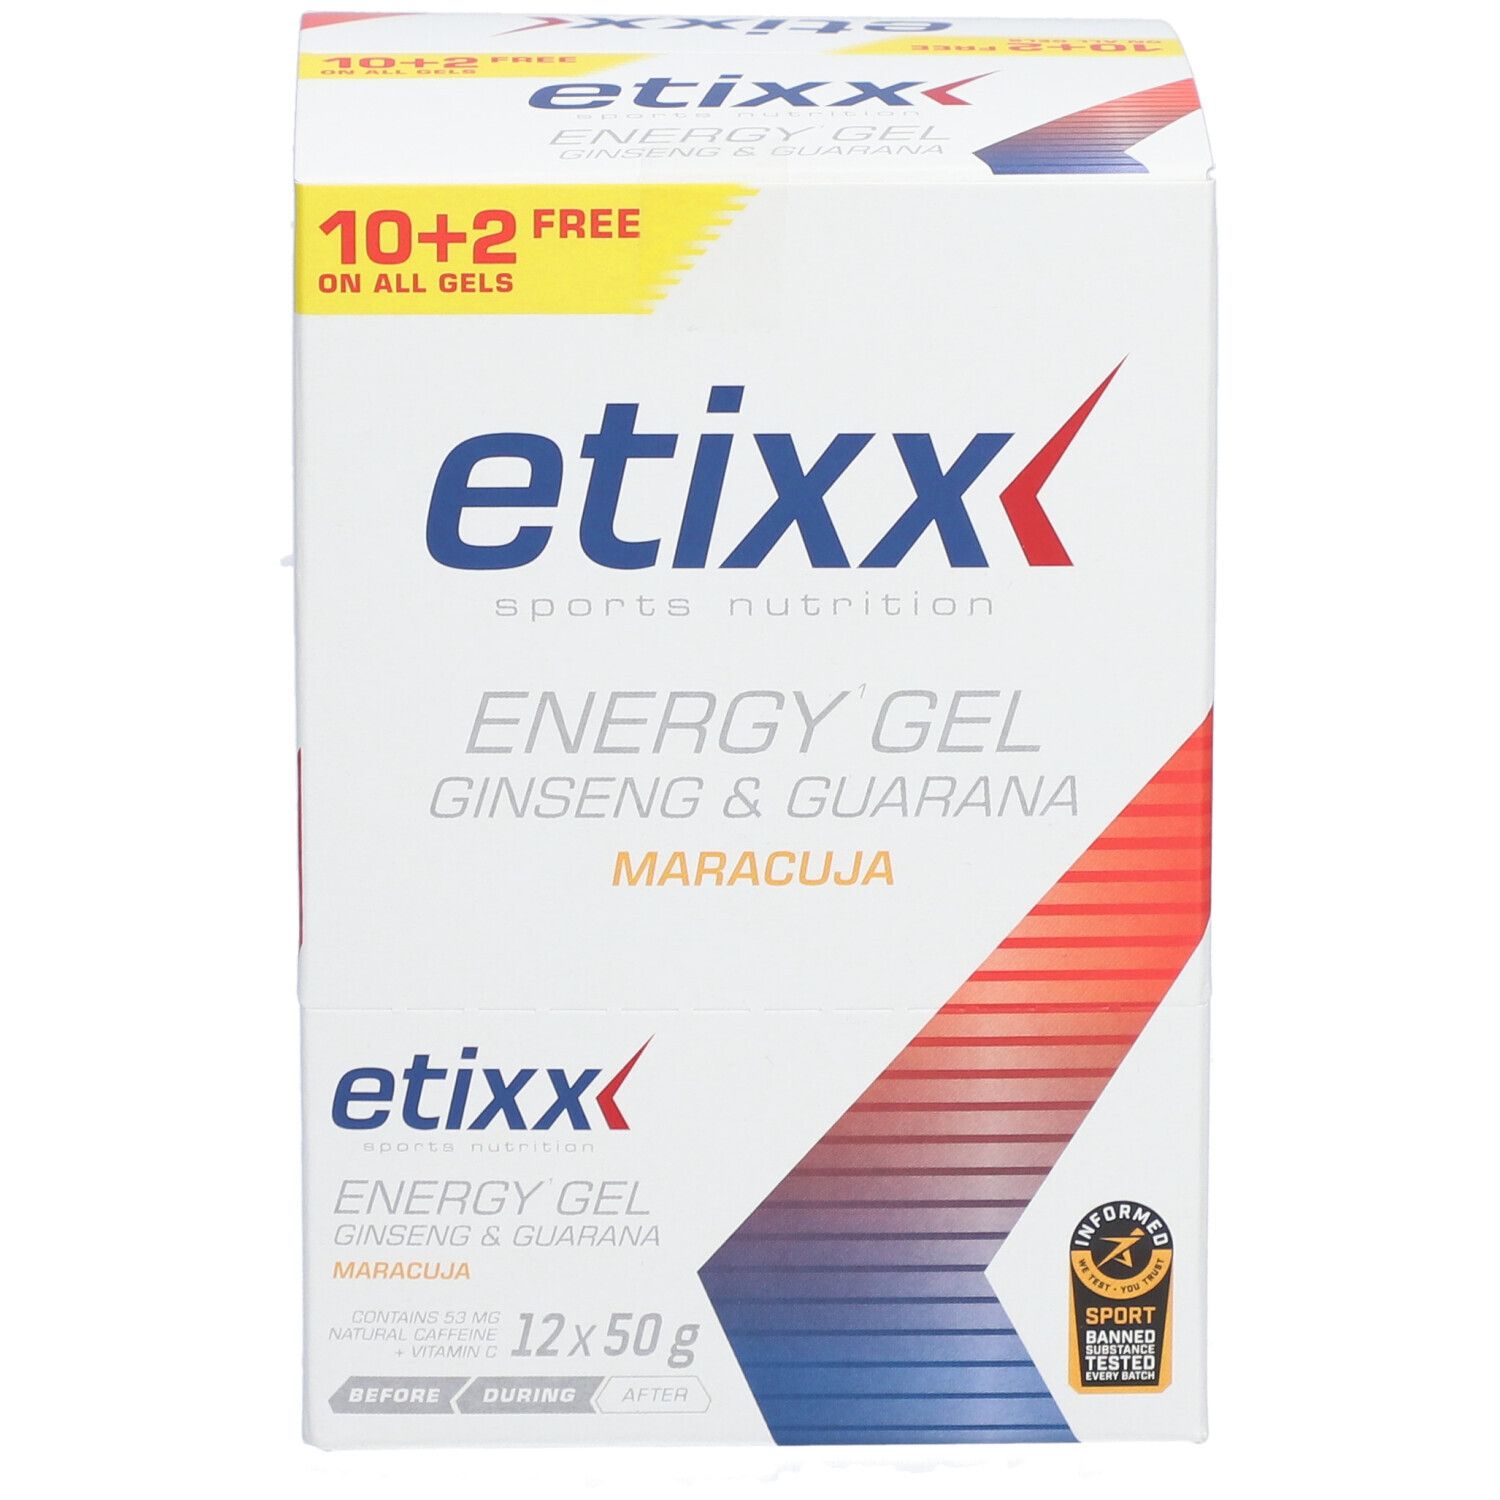 Etixx Ginseng & Guarana Energy Gel Maracuja